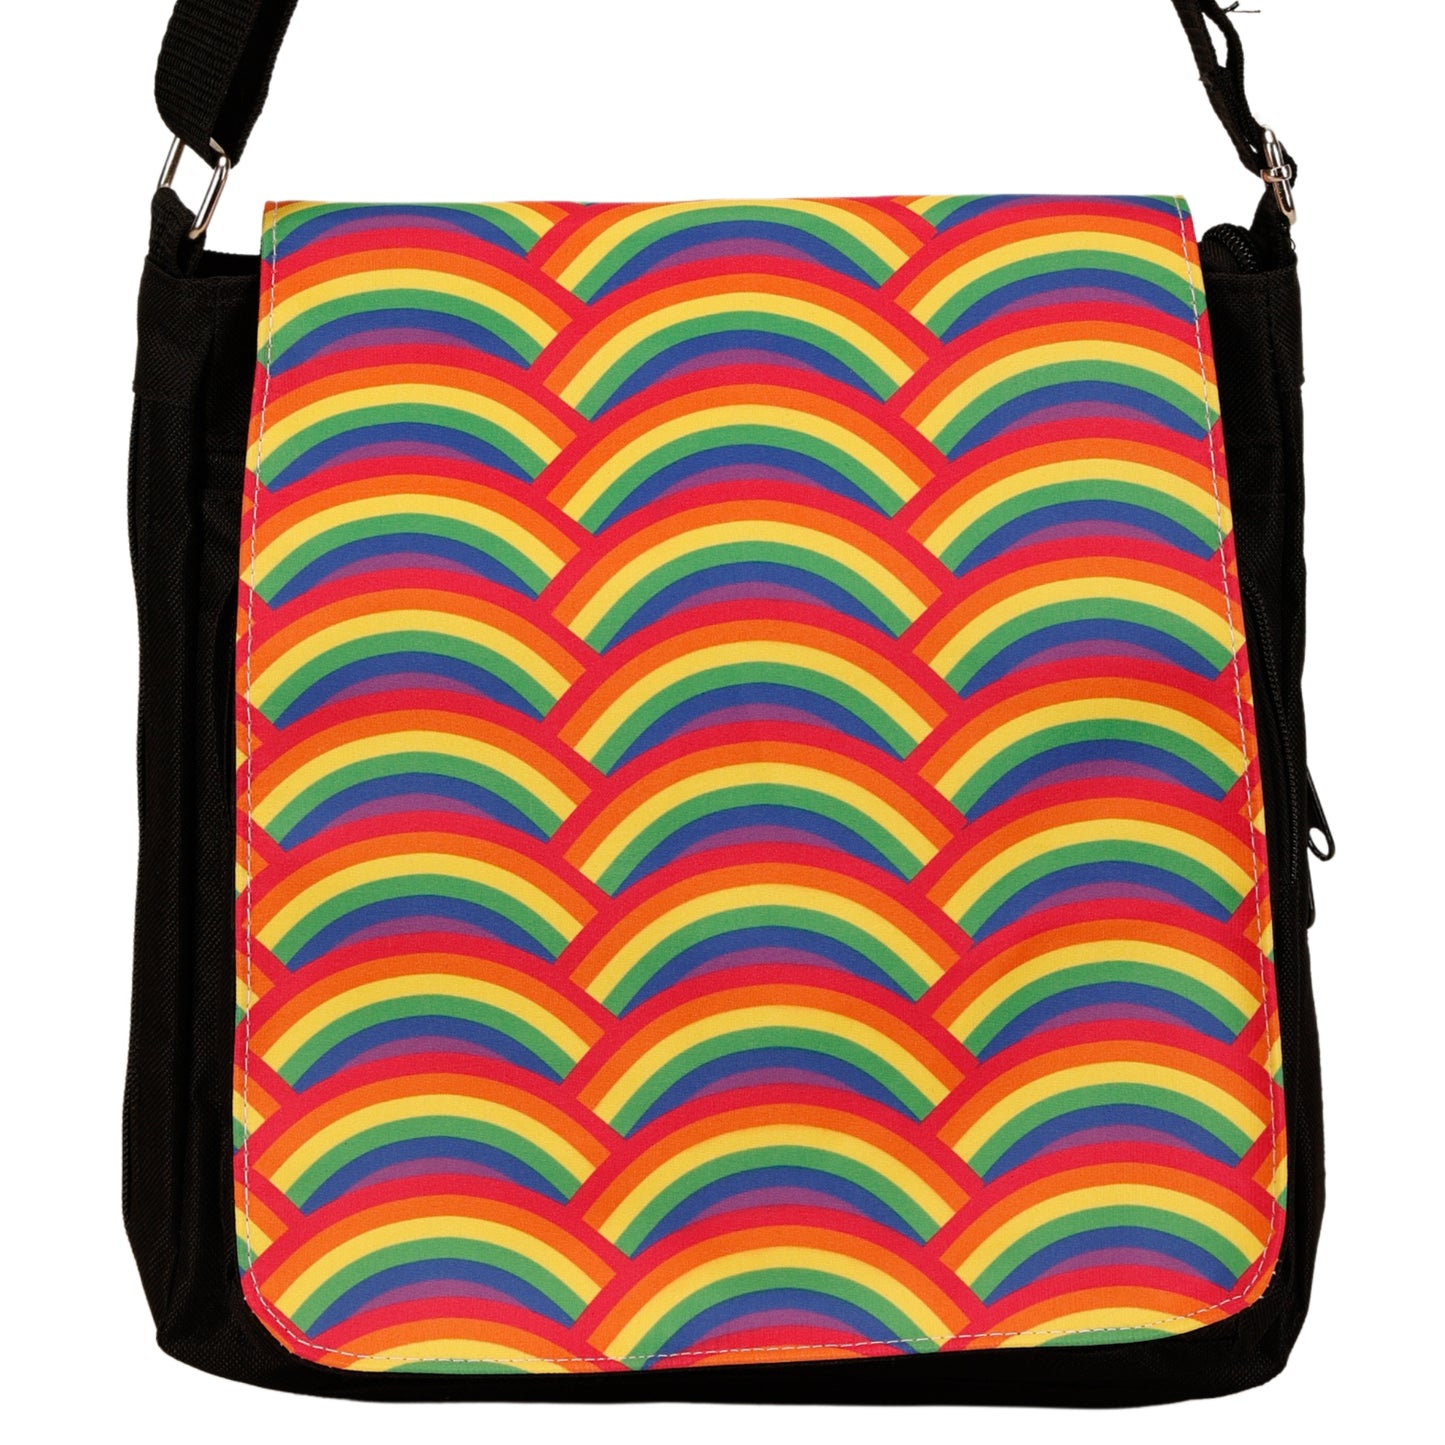 Rainbow Messenger Bag by RainbowsAndFairies.com.au (Rainbows - Pride - Psychedelic - Satchel Bag - Interchangeable Cover - Handbag) - SKU: BG_SATCH_RAINB_ORG - Pic-02